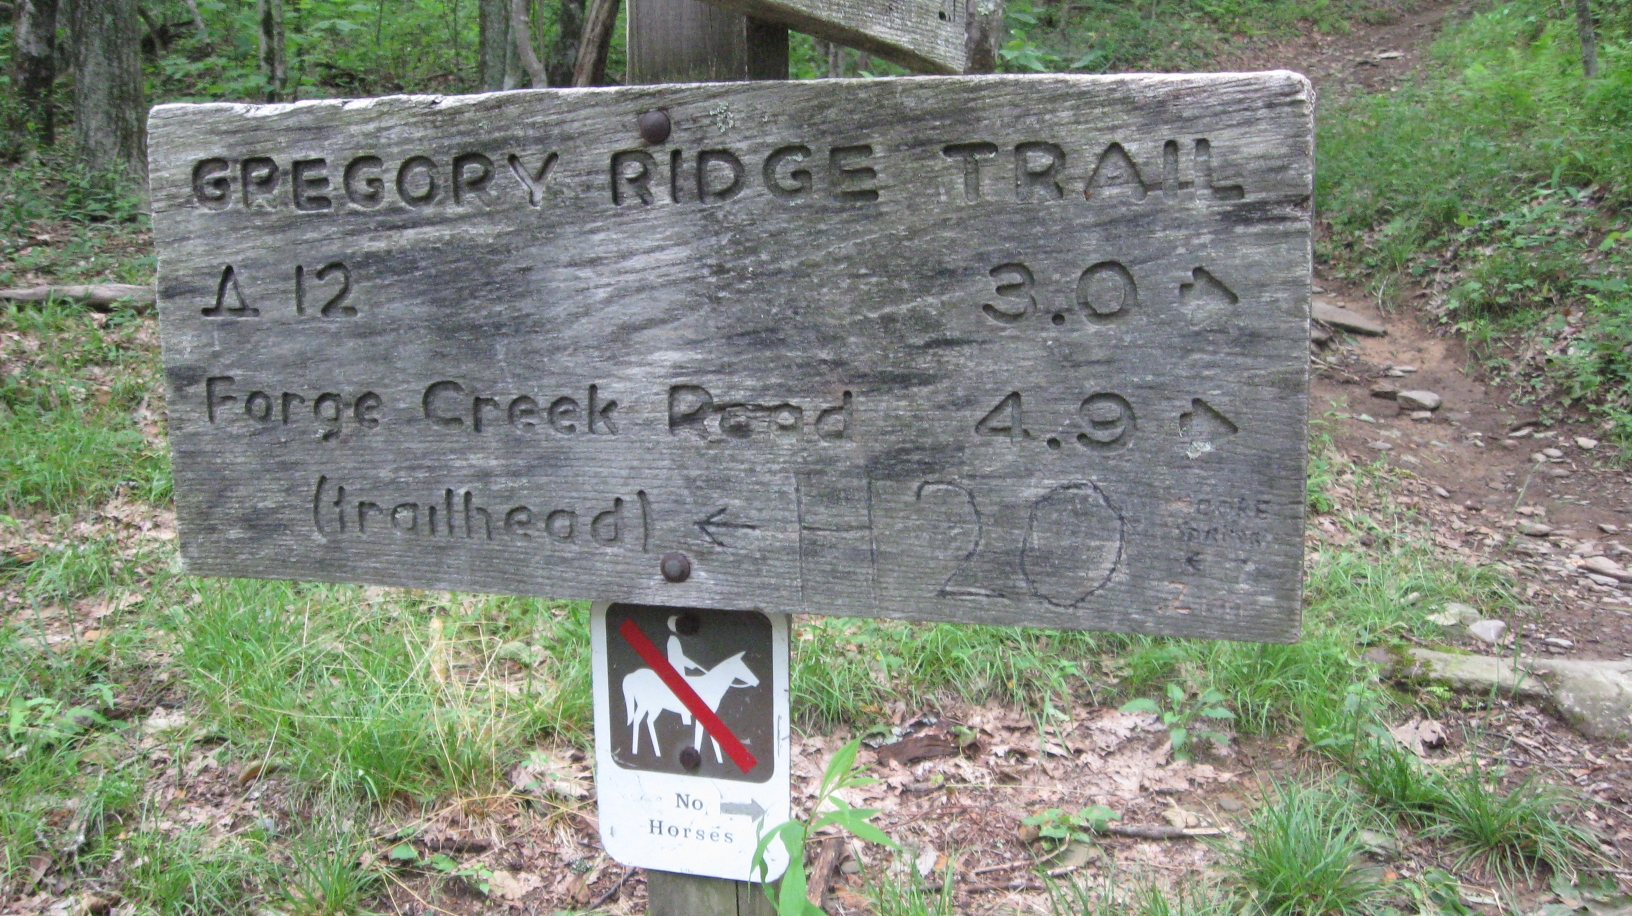 Gregory Ridge Trail